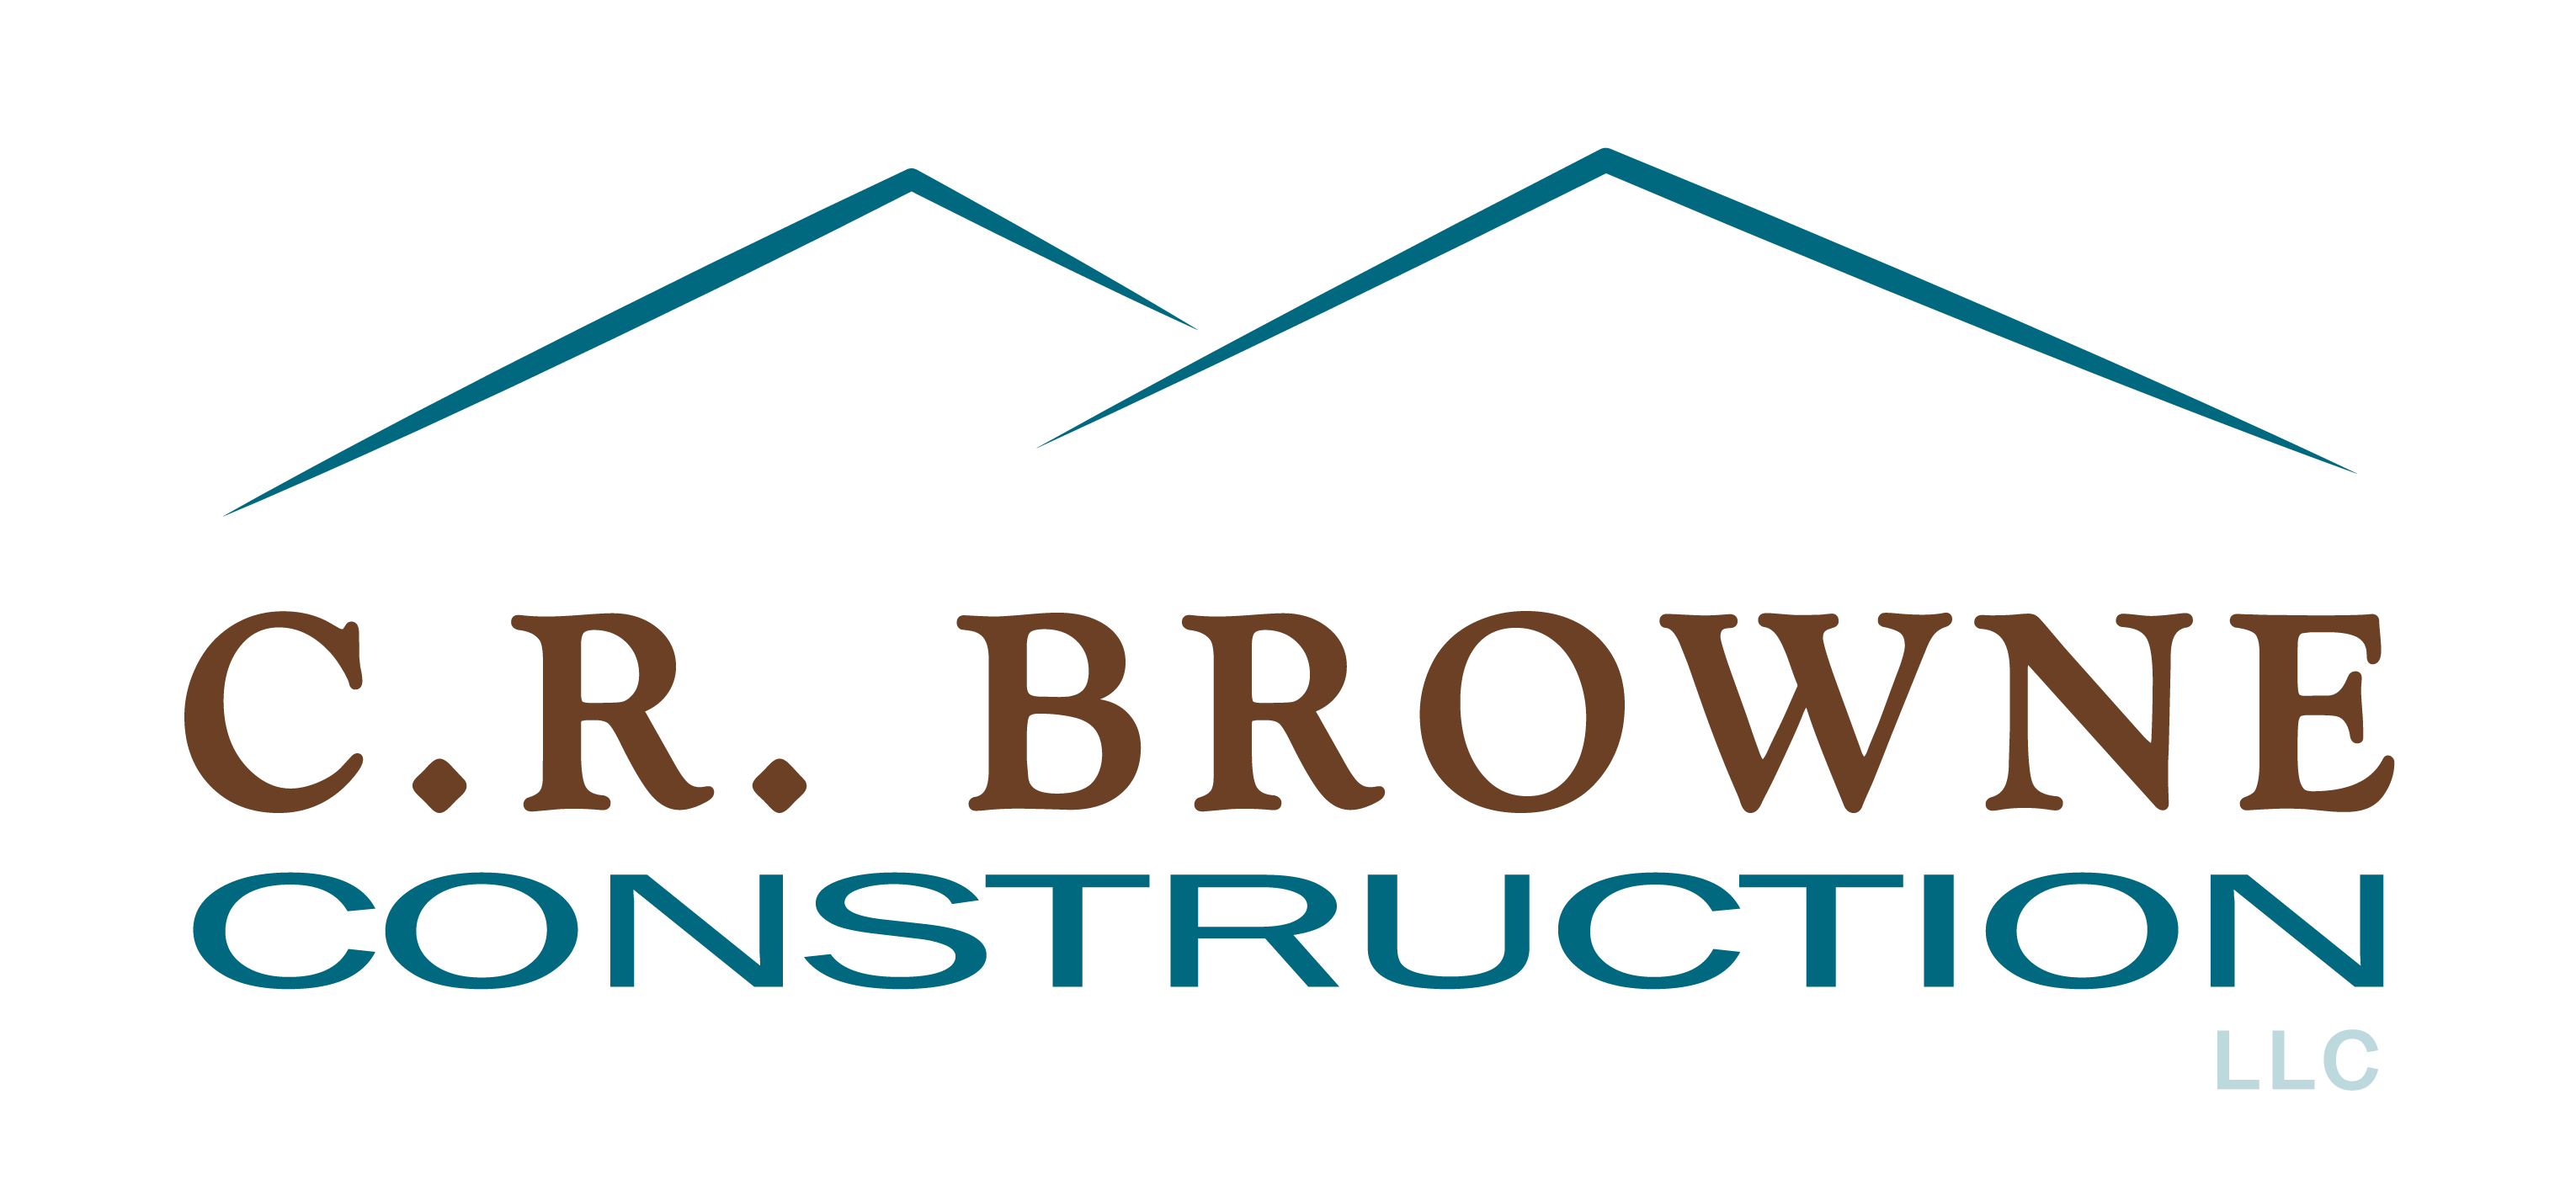 C.R. Browne Construction